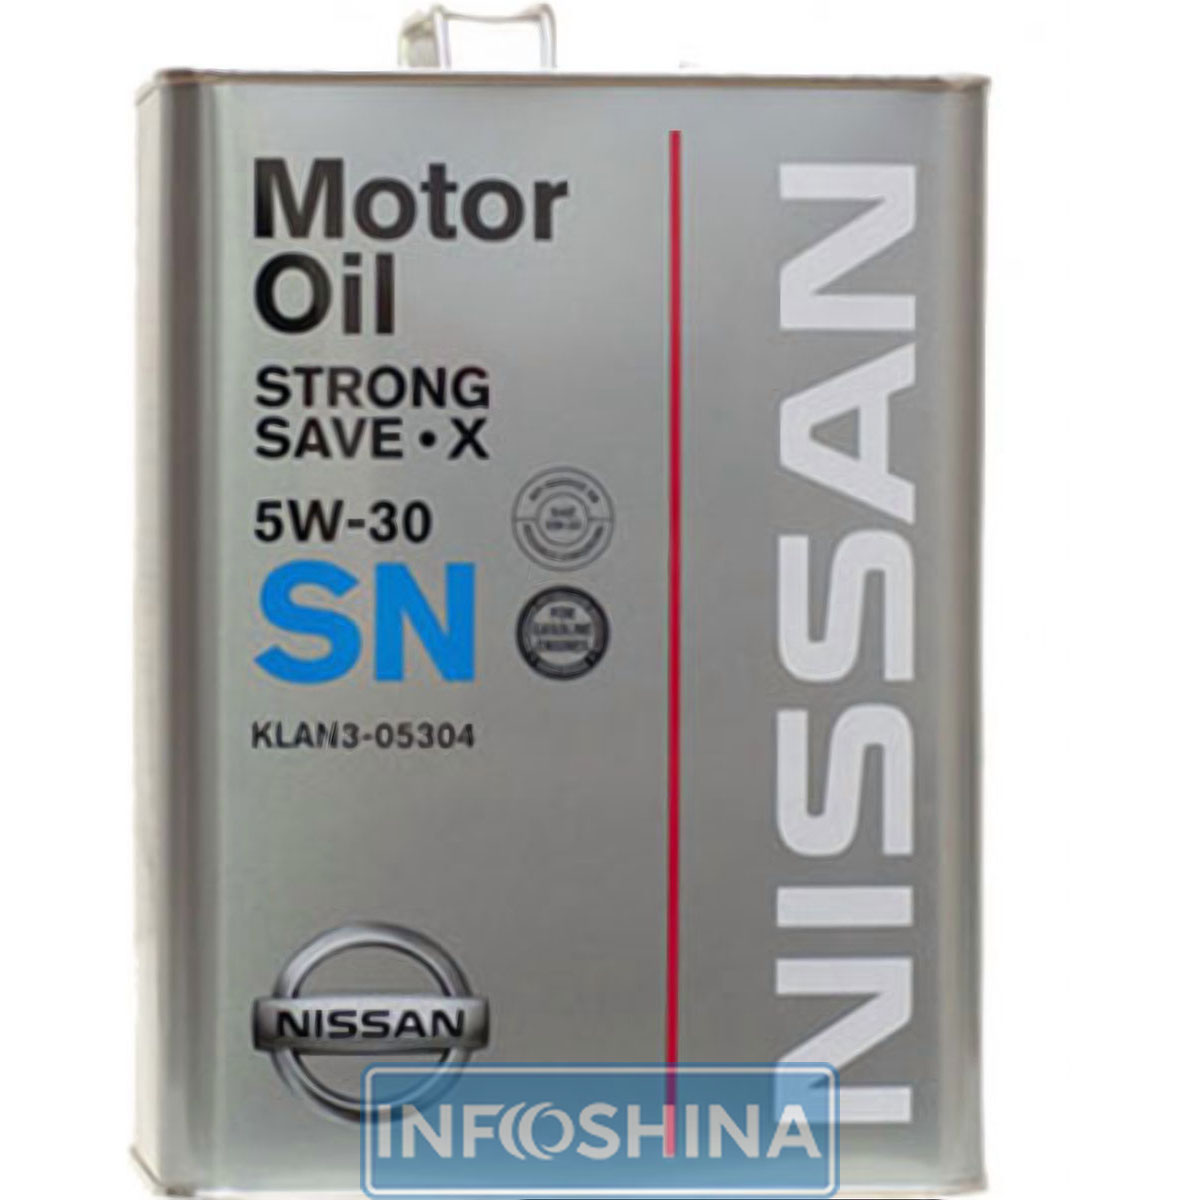 Купить масло Nissan SN Strong Save X 5W-30 (4л)